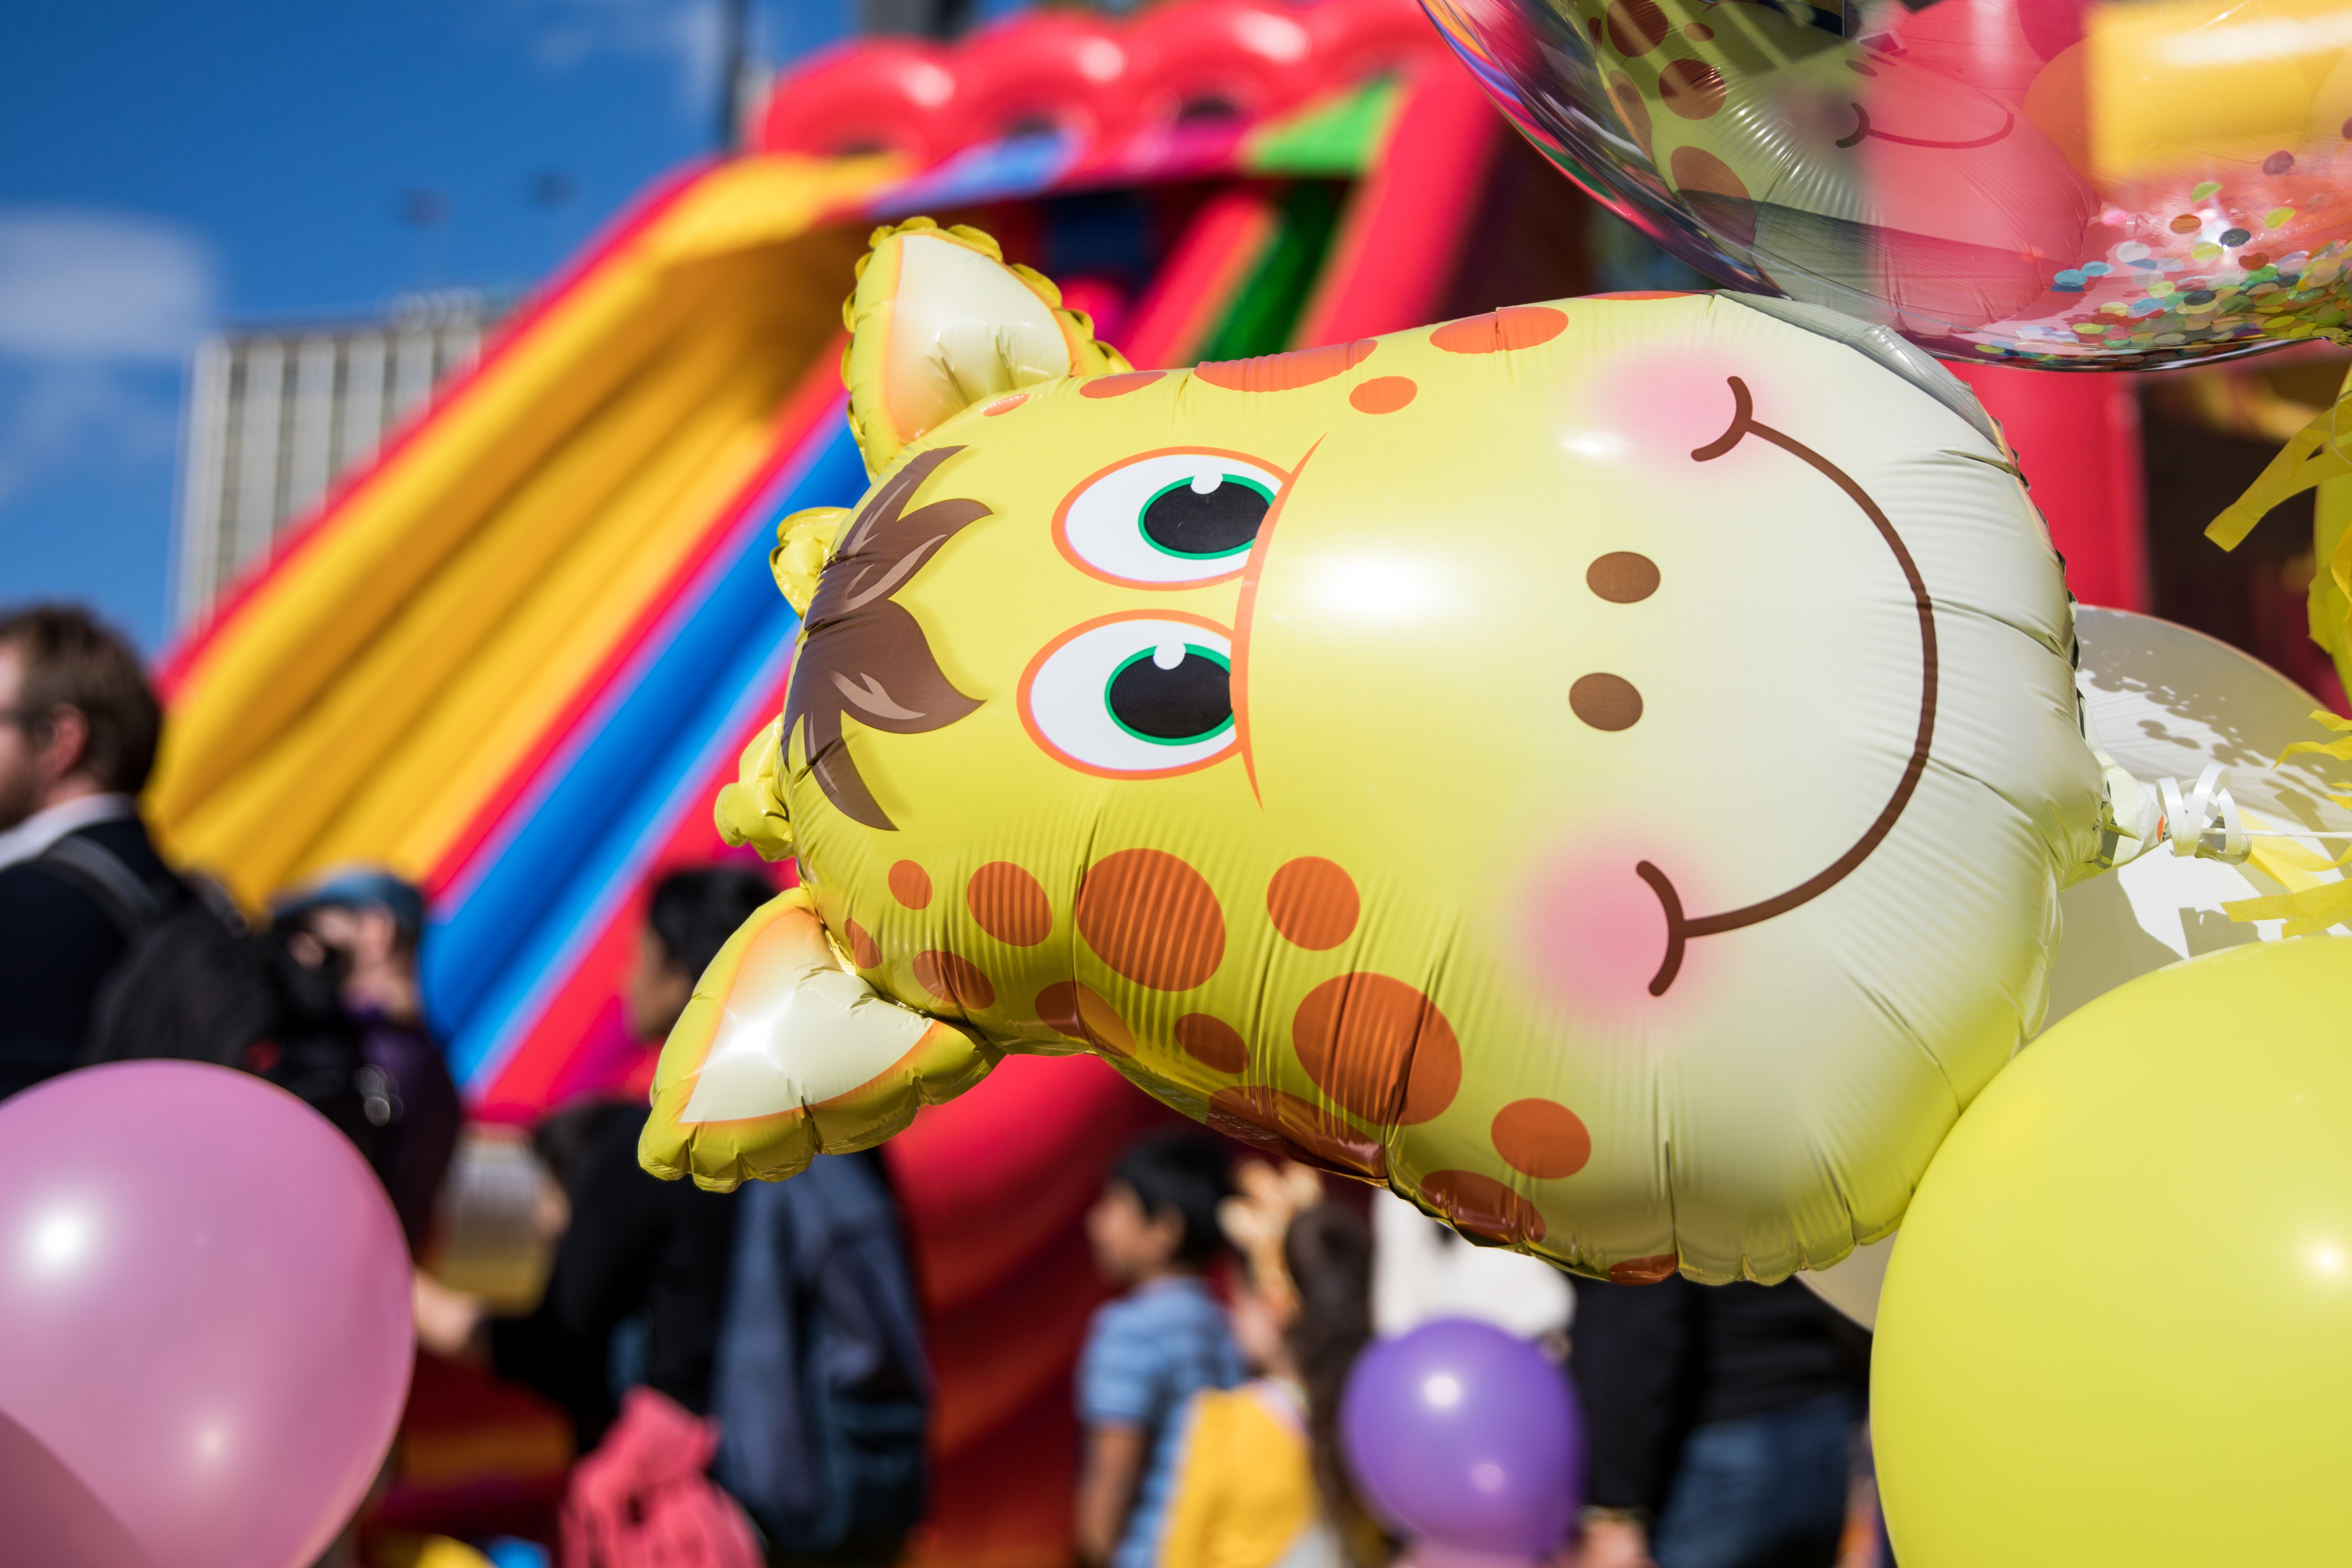 big-smiley-yellow-giraffe-balloon-at-a-carnival-on-2021-09-03-21-31-40-utc